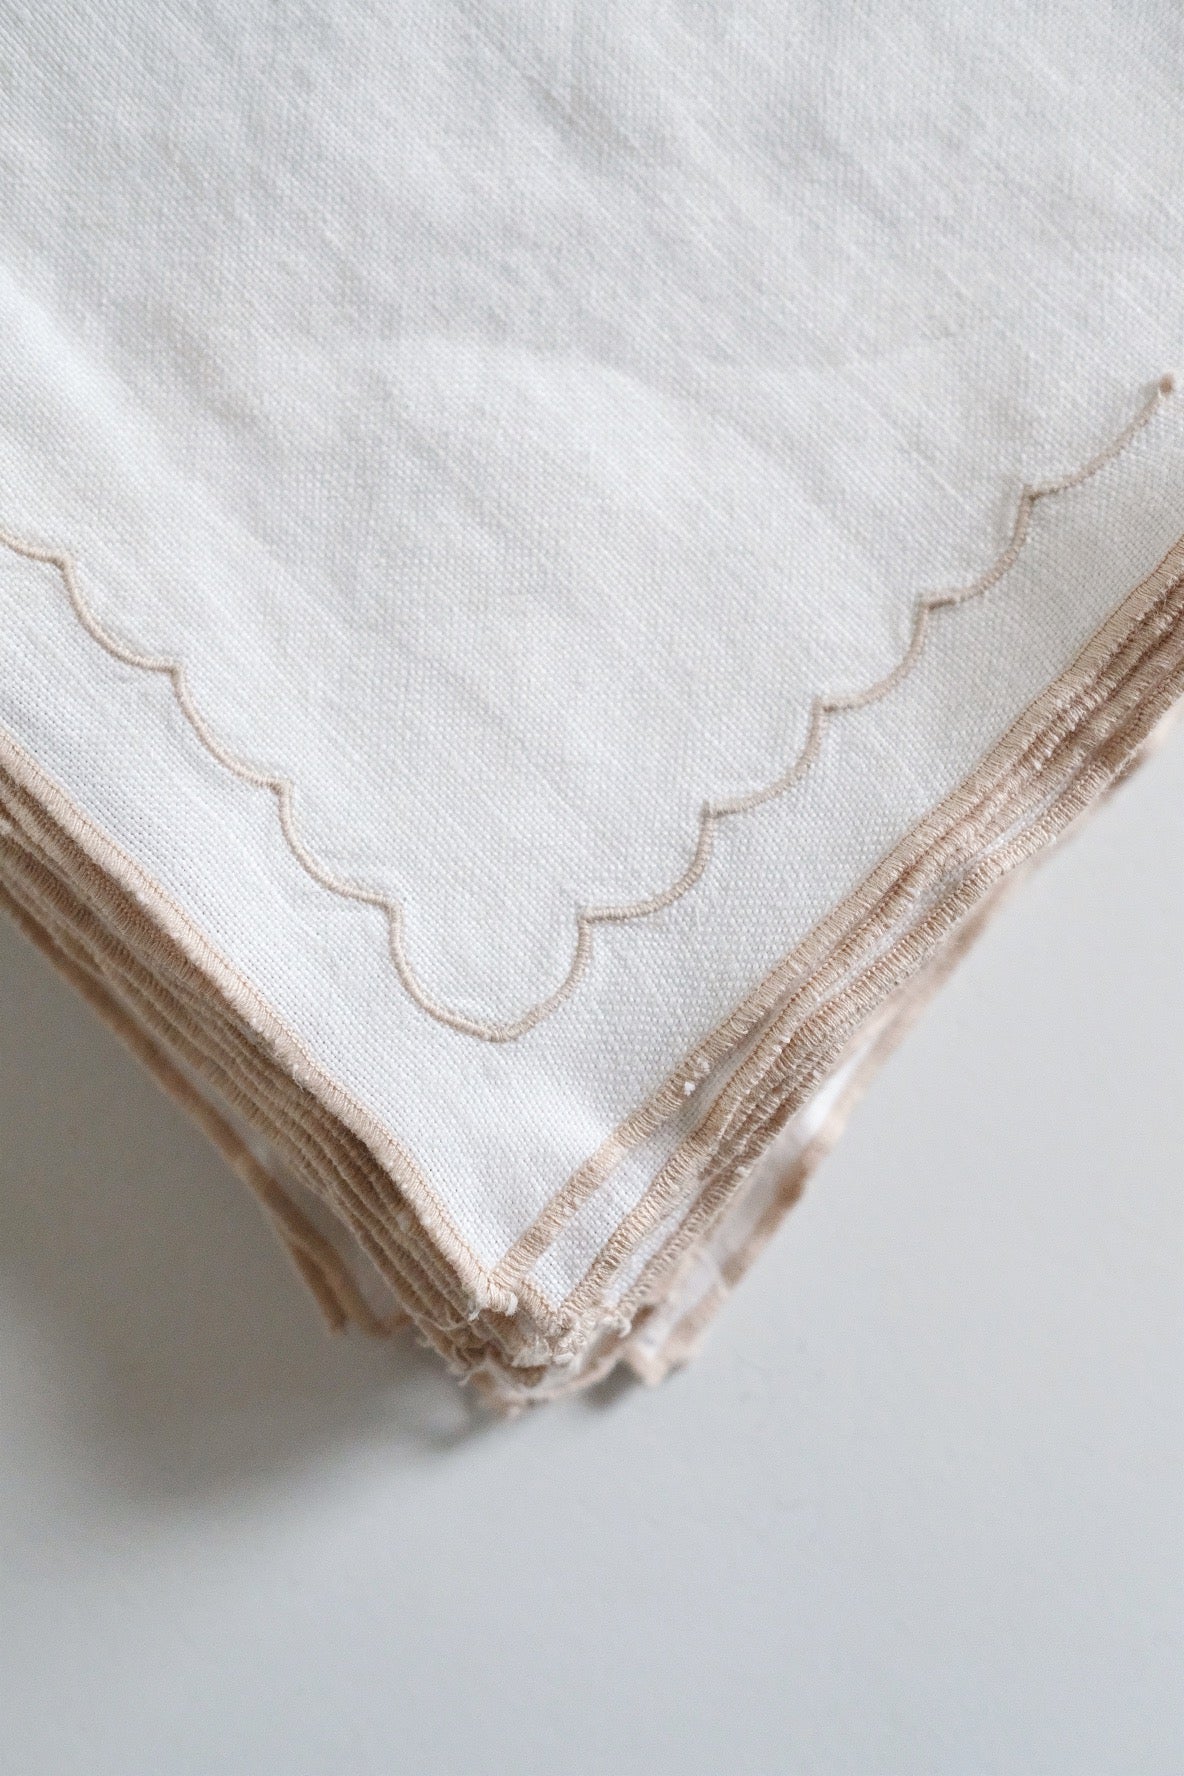 linen napkins - set of 11